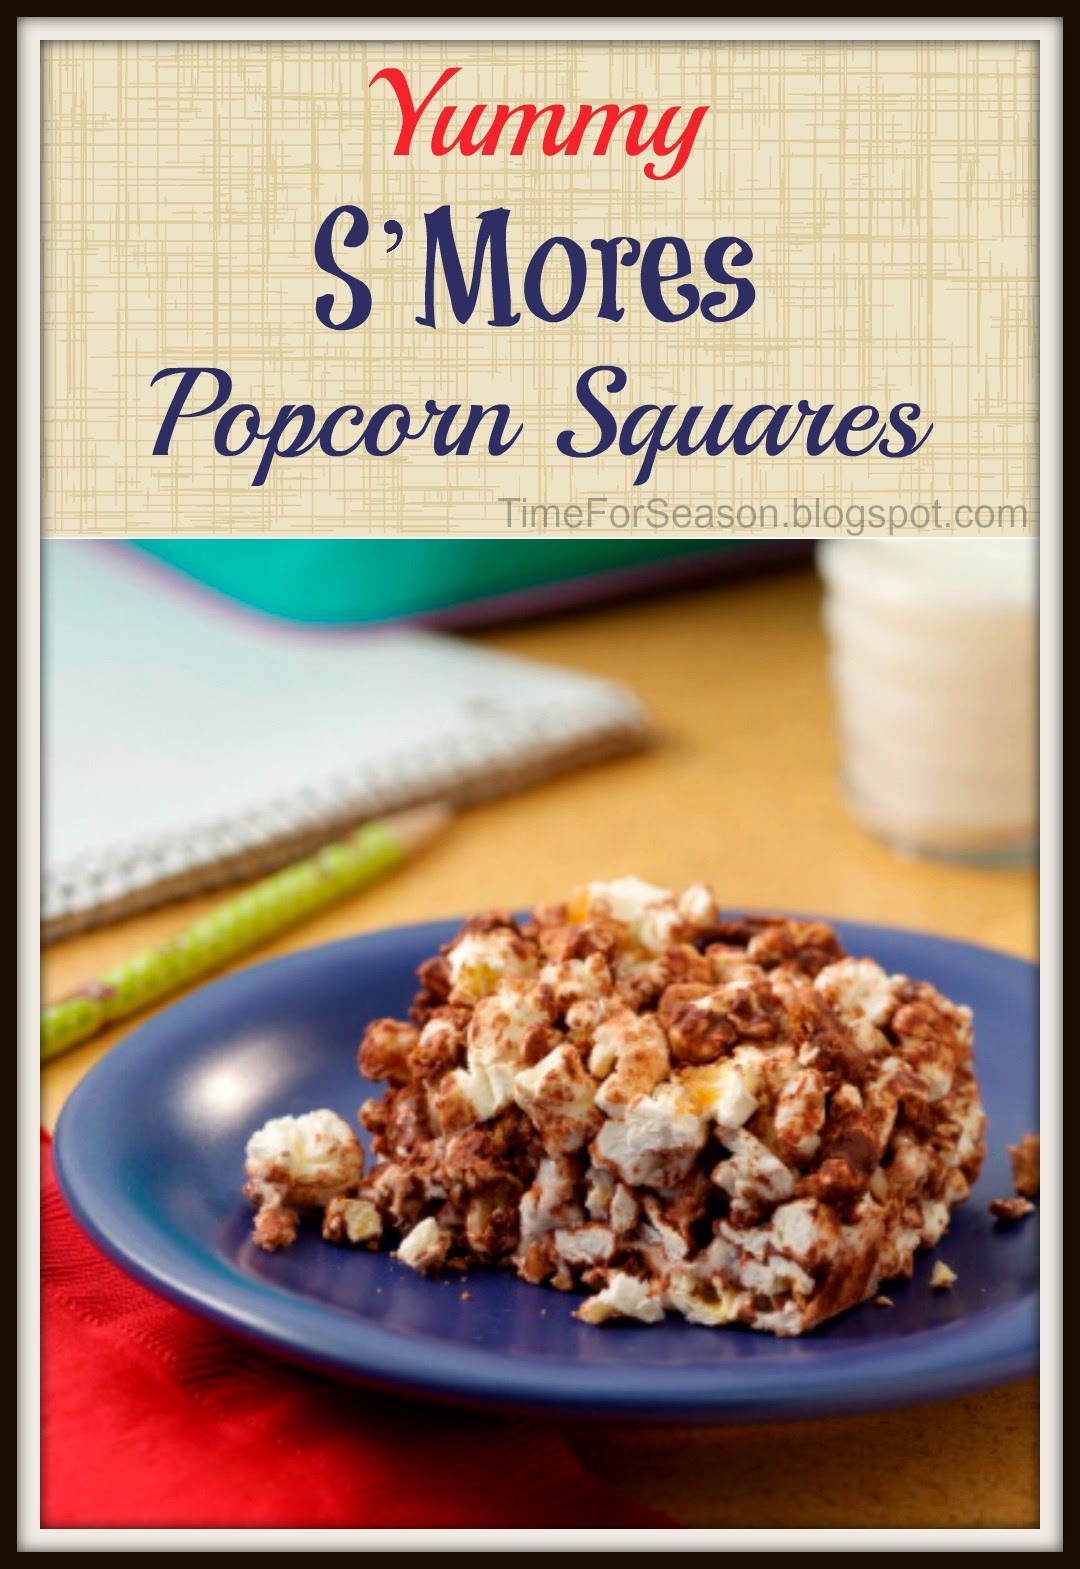 http://timeforseason.blogspot.com/2014/05/smores-popcorn-squares-recipe.html